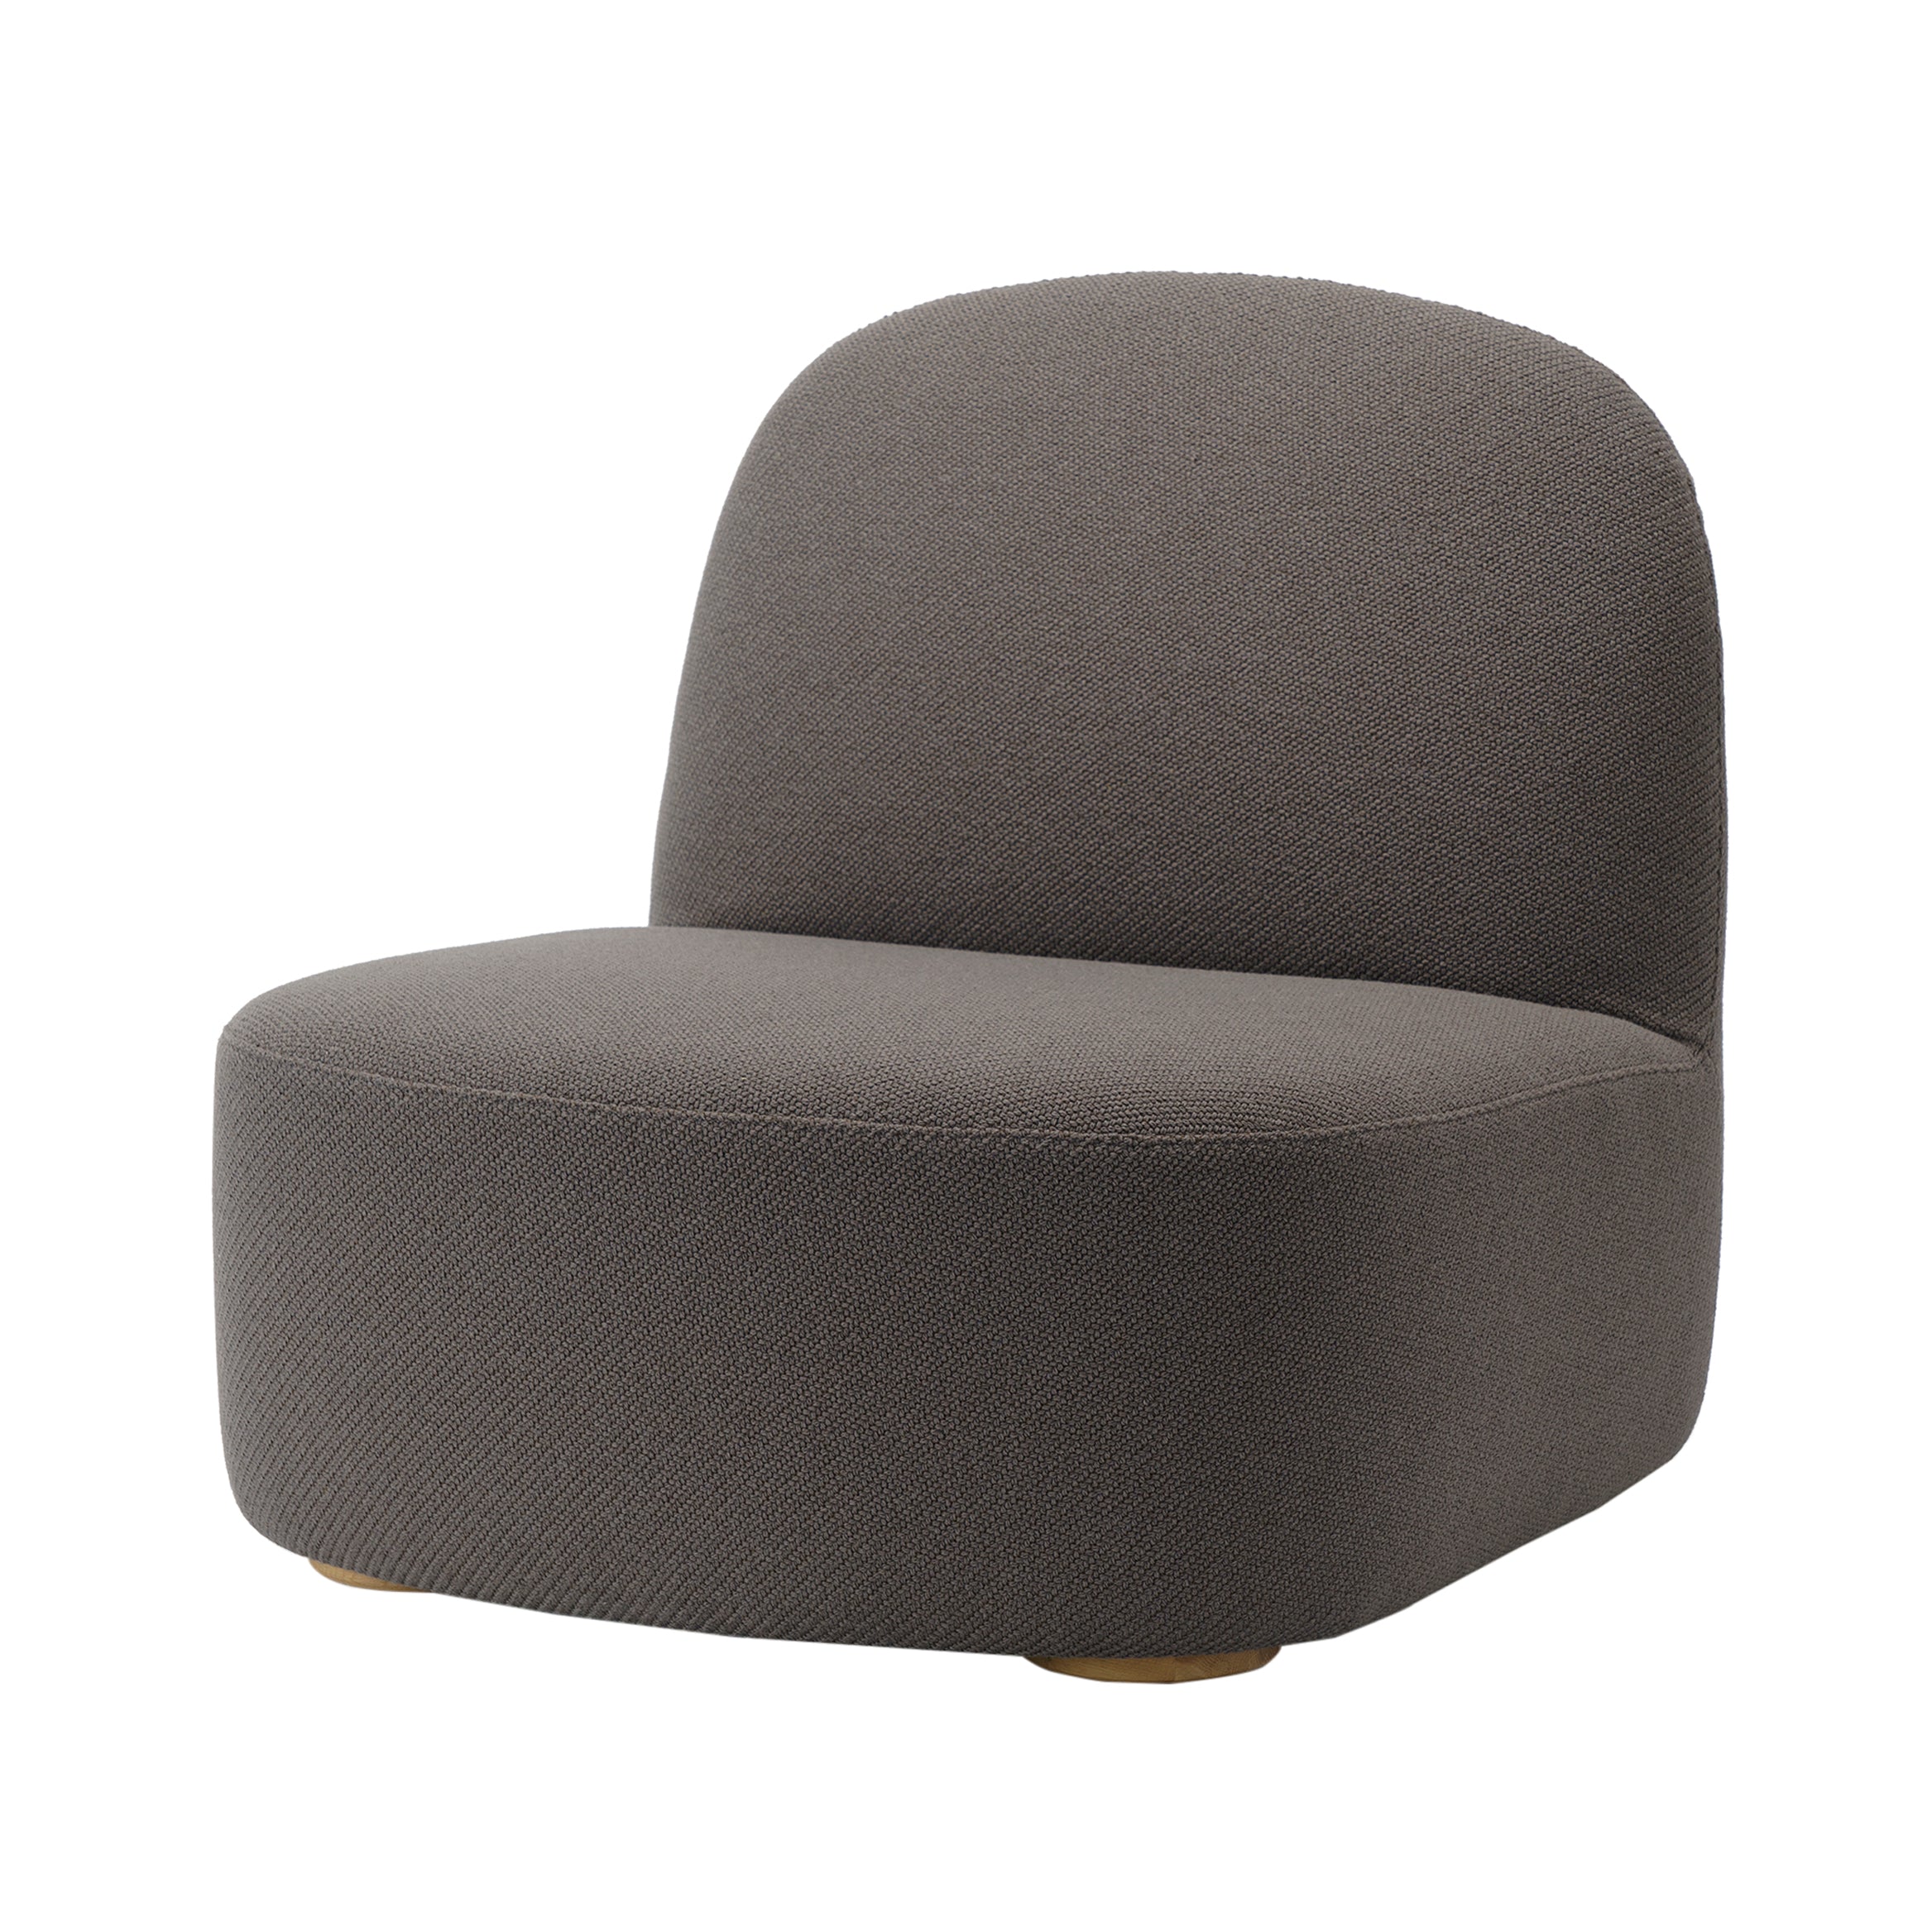 Polar Lounge Chair: Large - 32.3